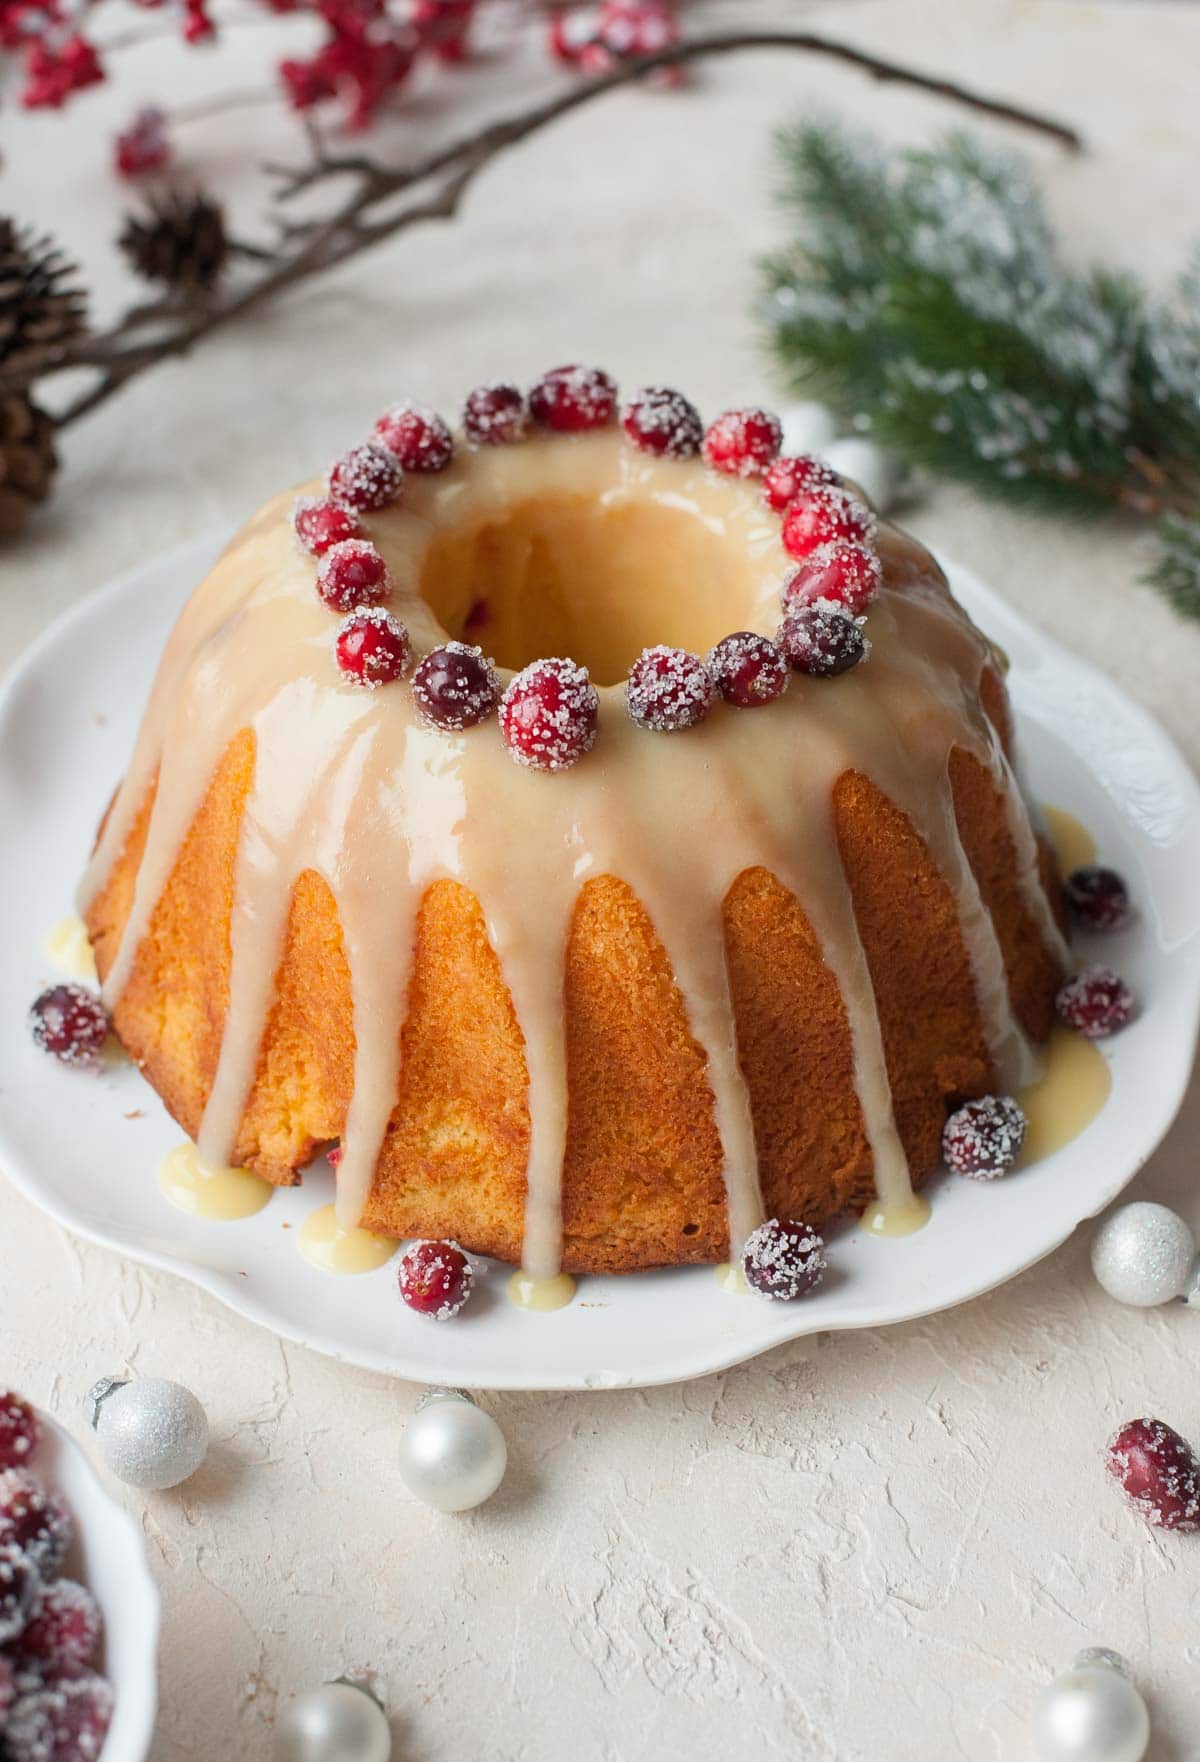 Christmas Spruce Cake for the Festive Season